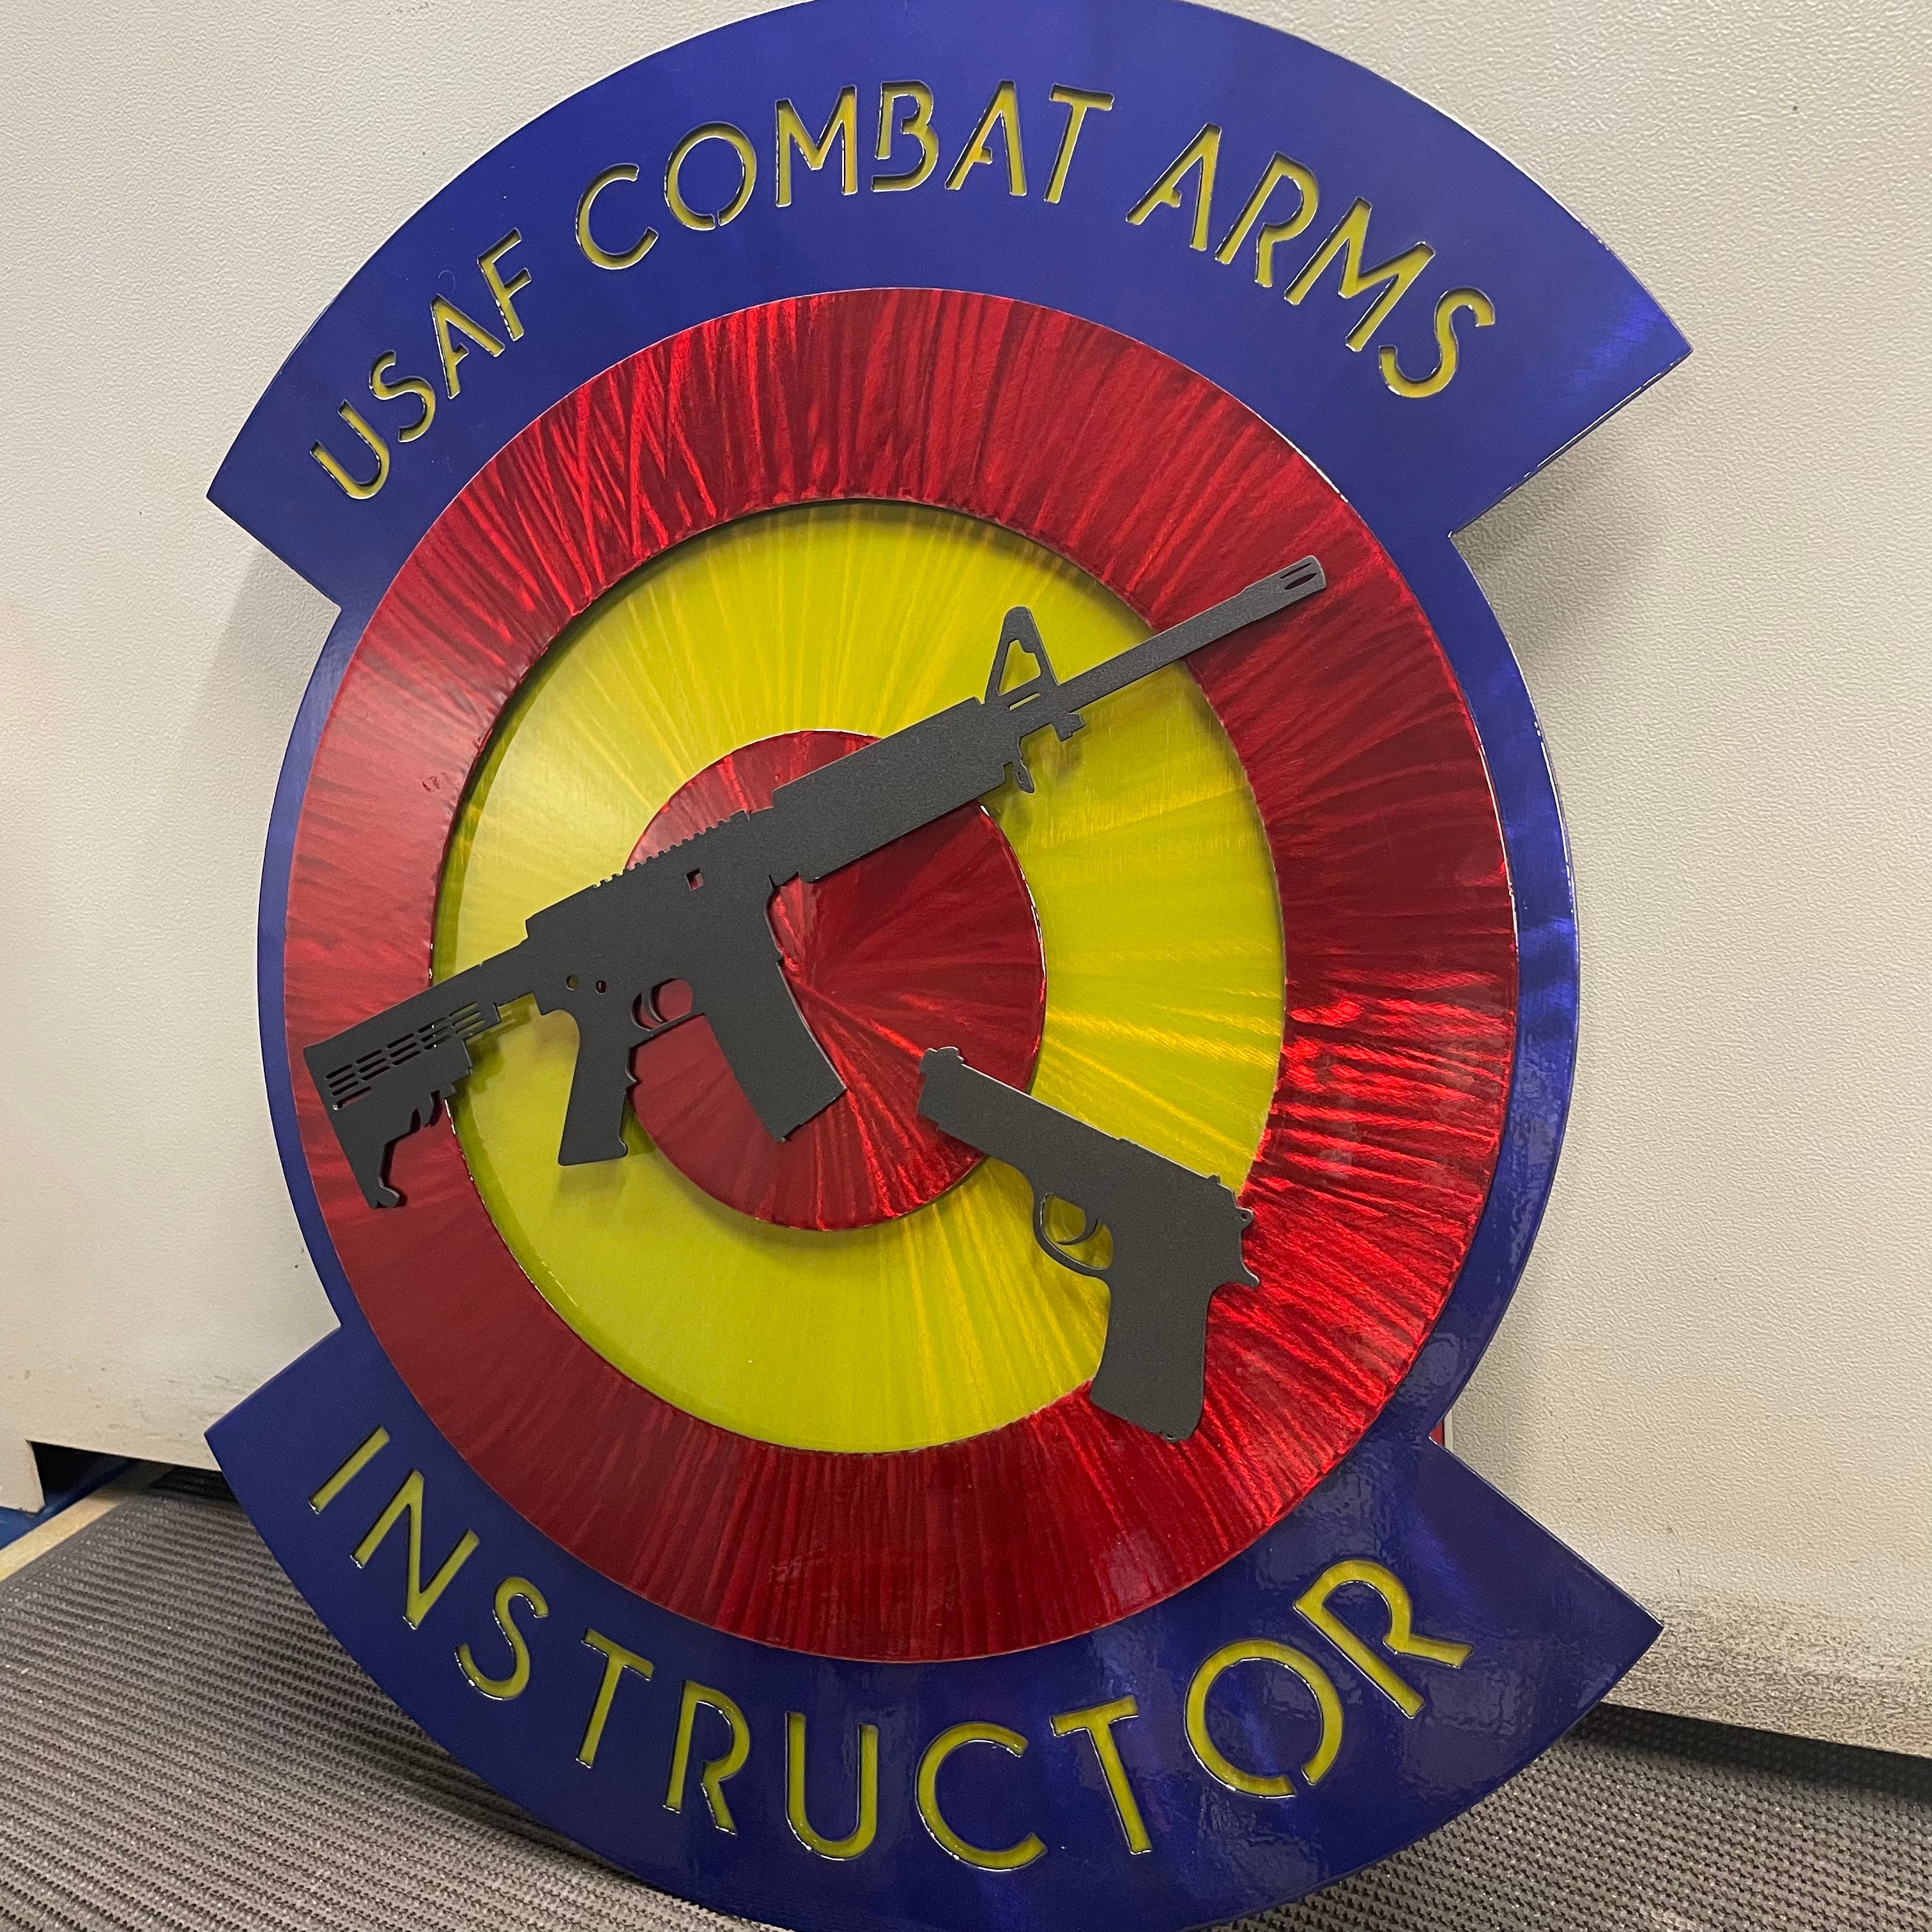 USAF Combat Arms Instructor - sign